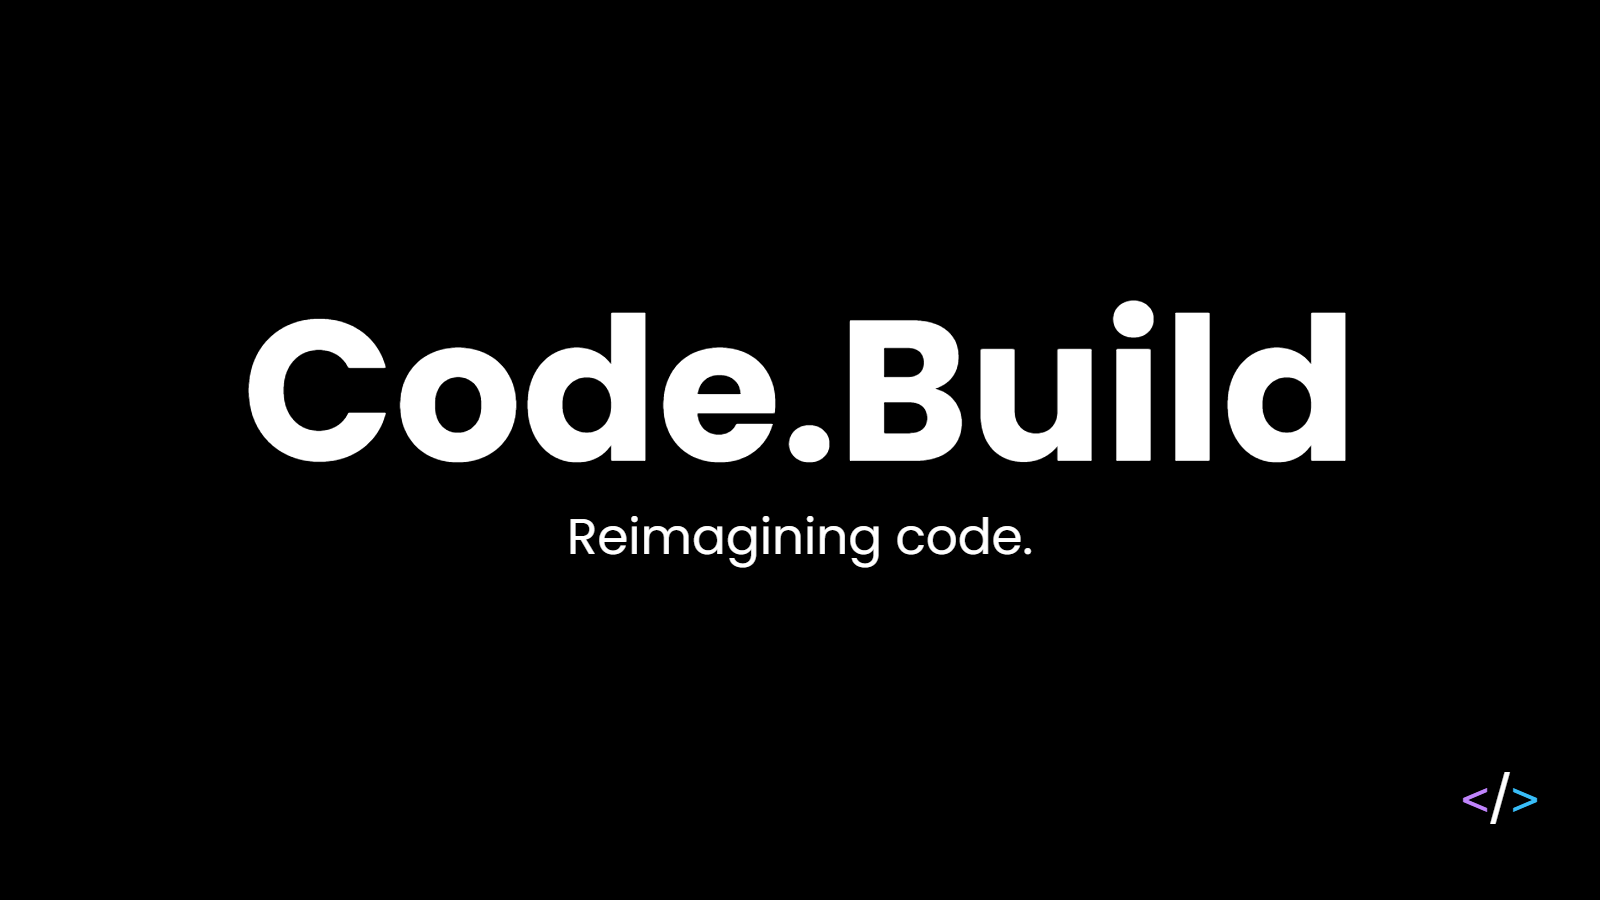 _images/code-build-dark.png